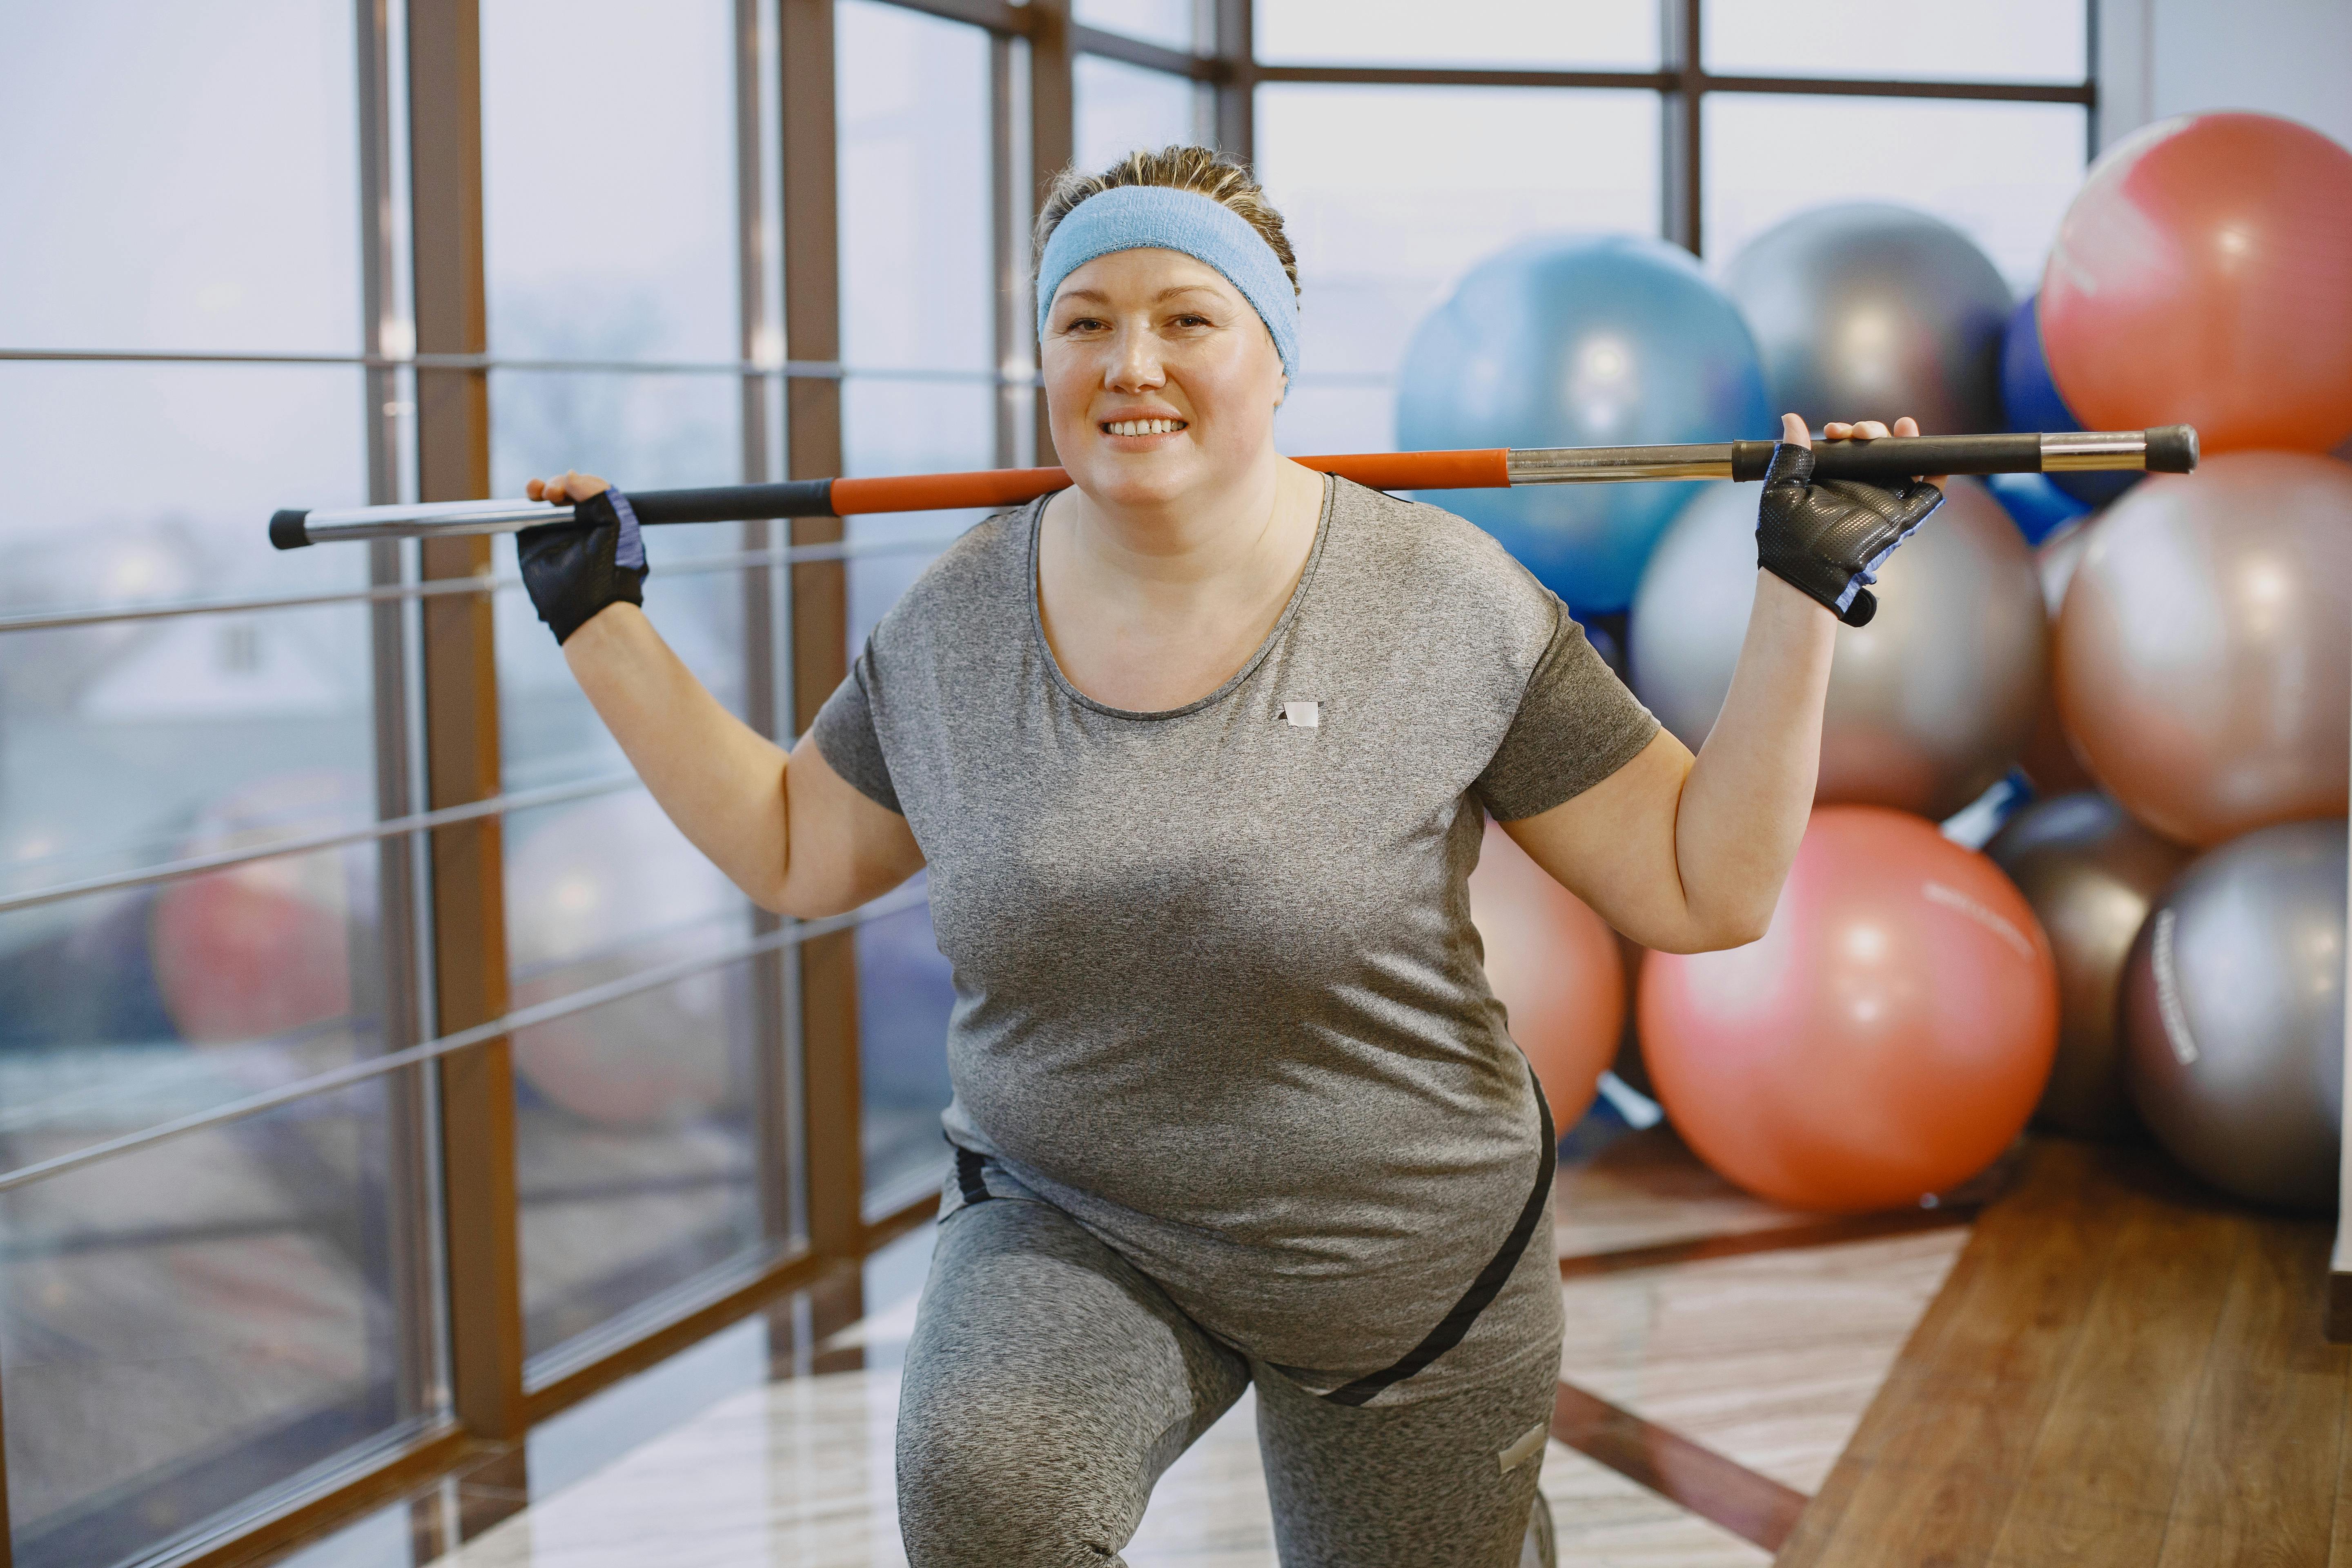 Smiling Plus Size Woman Exercising at Gym · Free Stock Photo